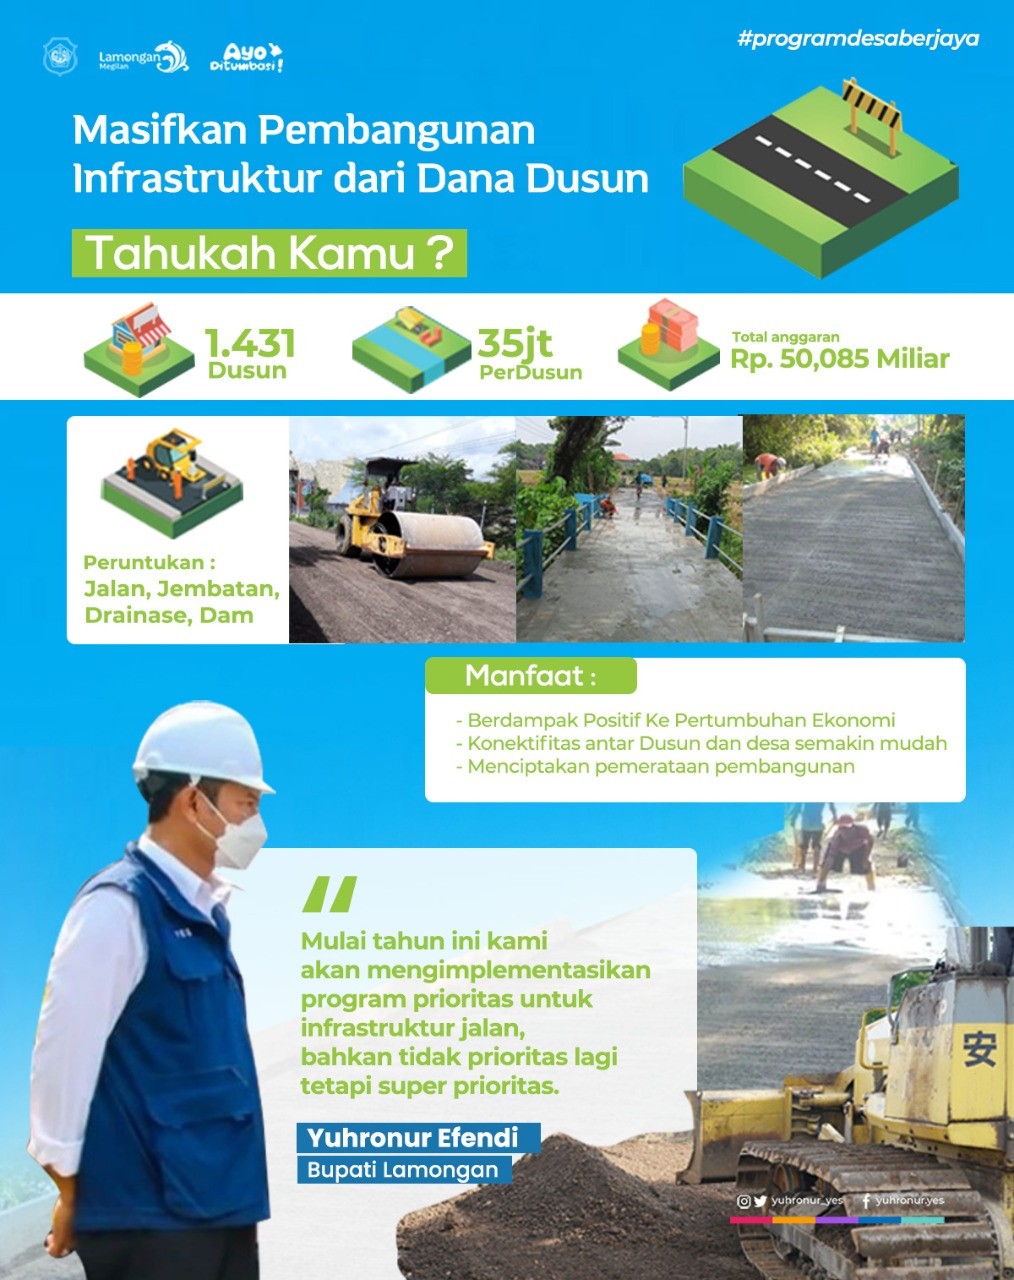 Masifkan Pembangunan Infrastruktur dari Dana Dusun